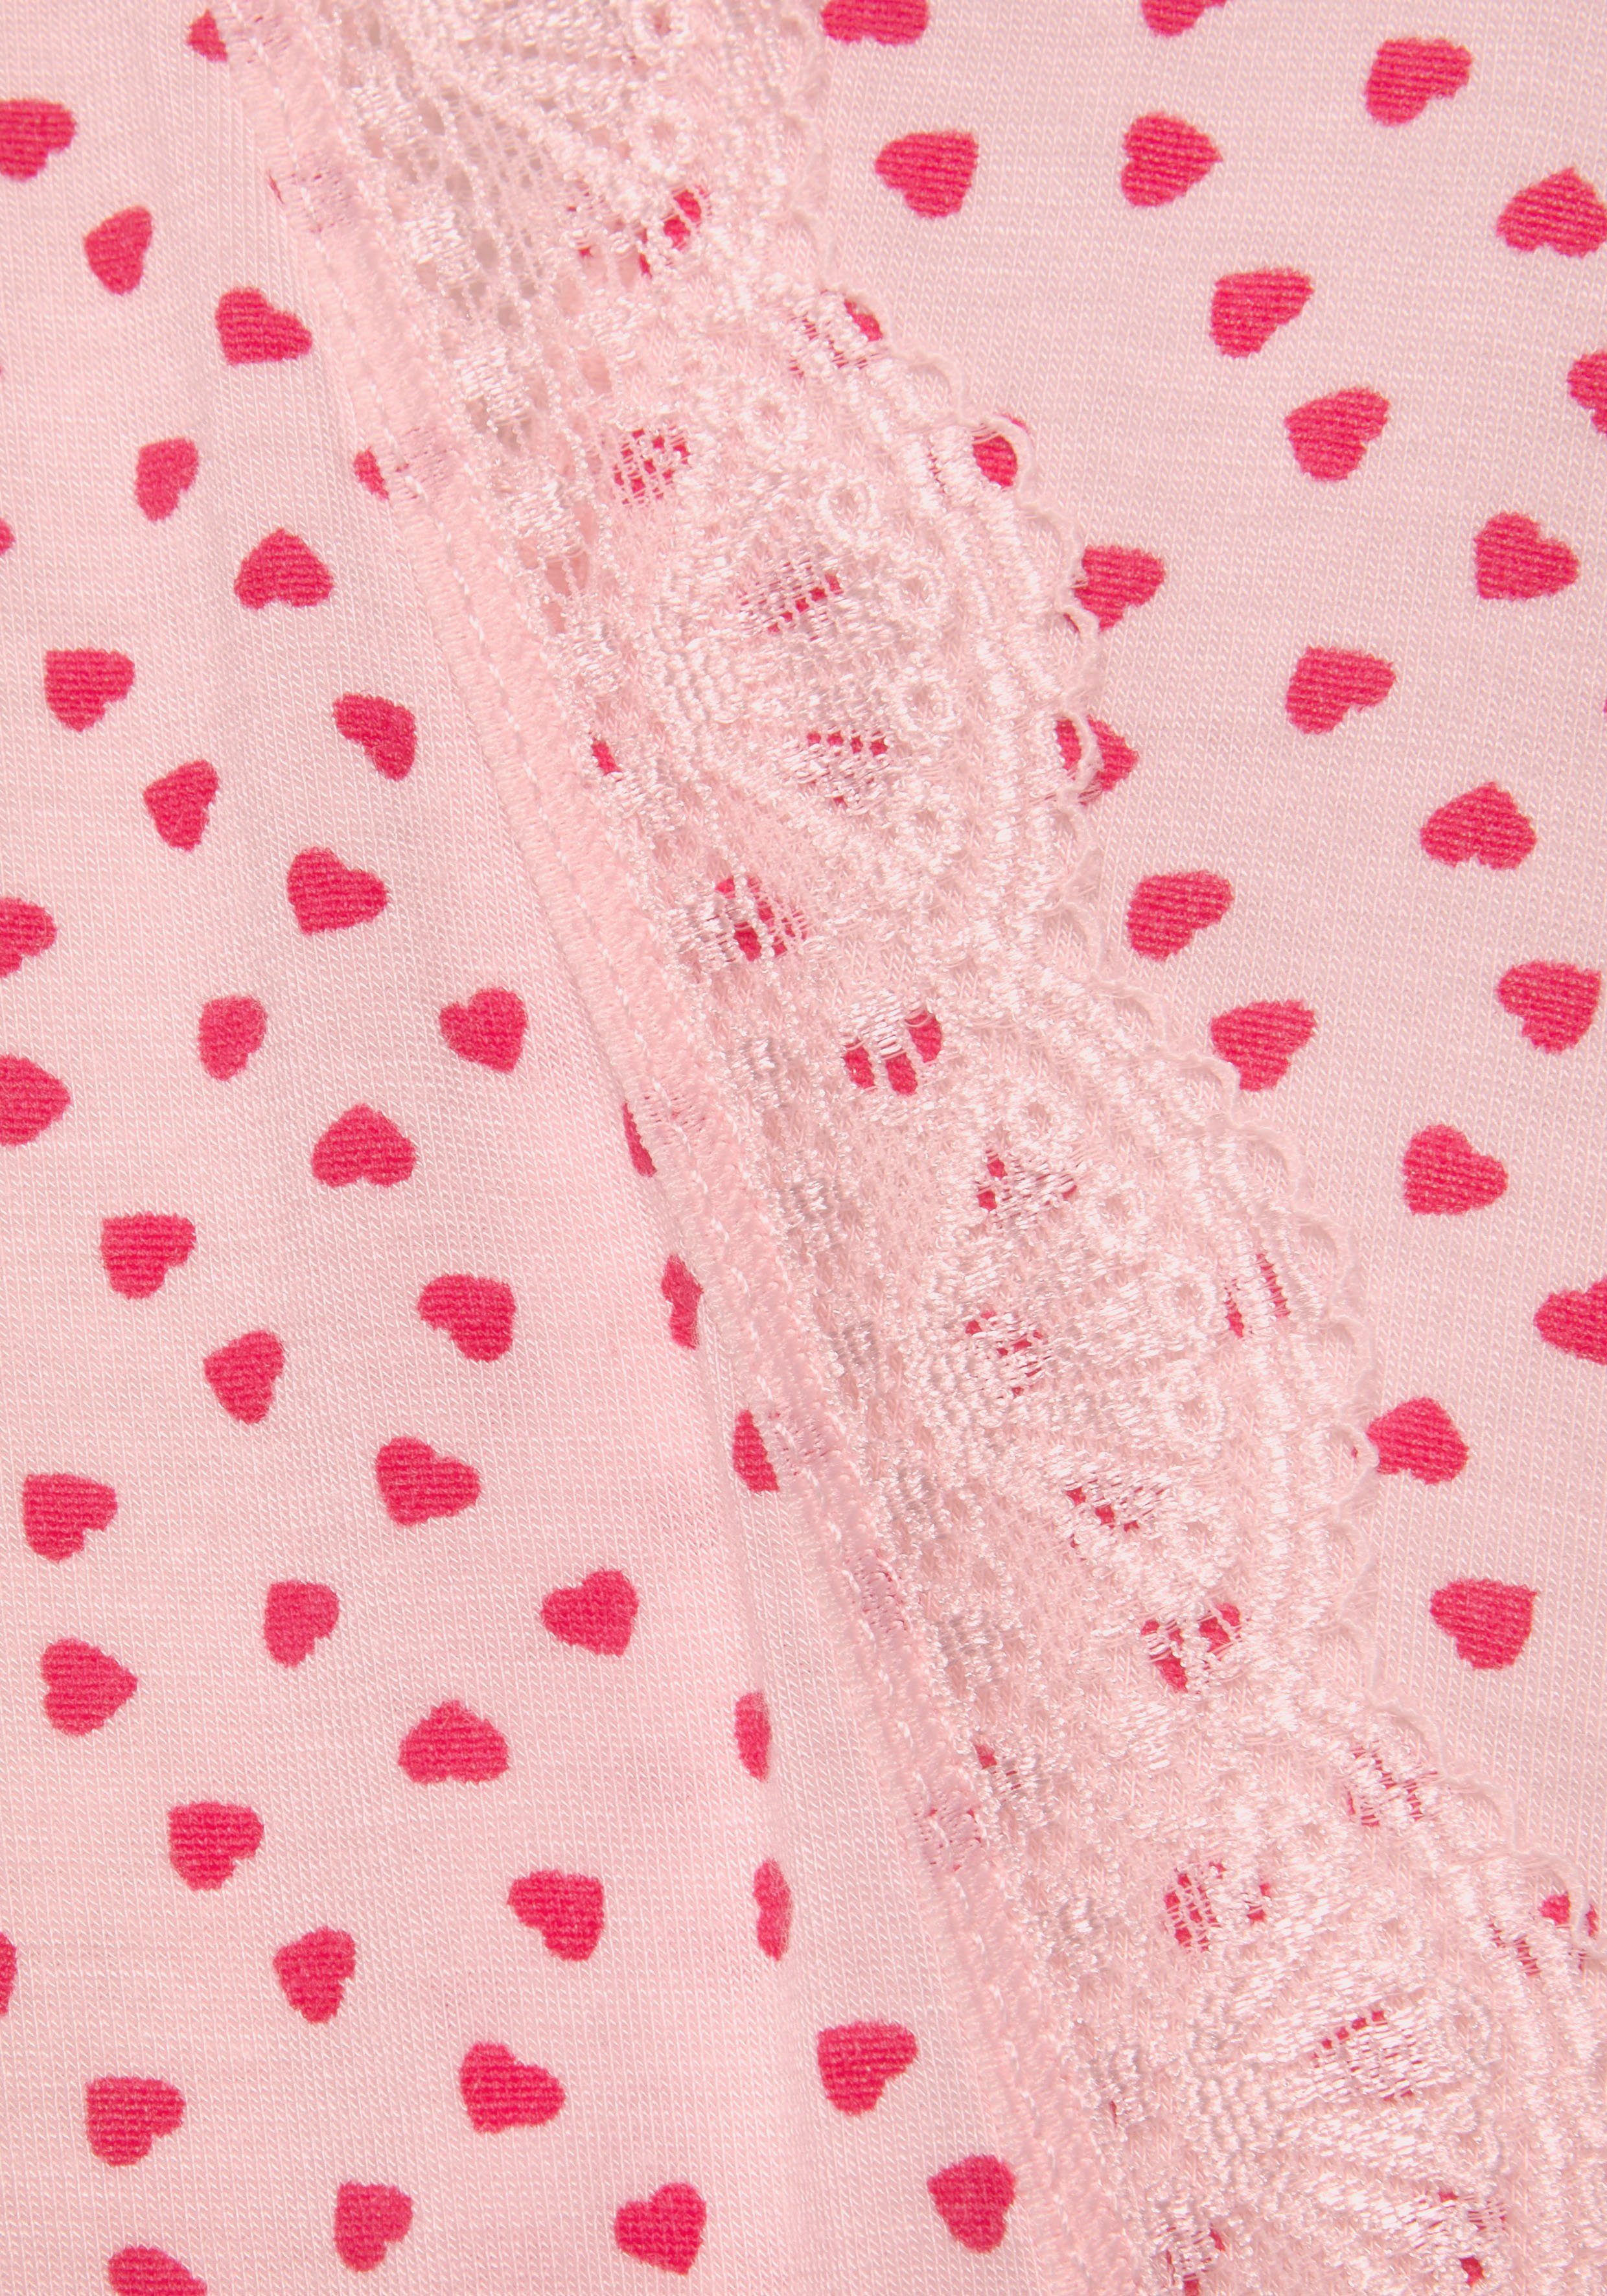 hellrosa-gemustert Single-Jersey, mit Kurzform, Gürtel, Spitze s.Oliver und Kimono, Herzchendruck